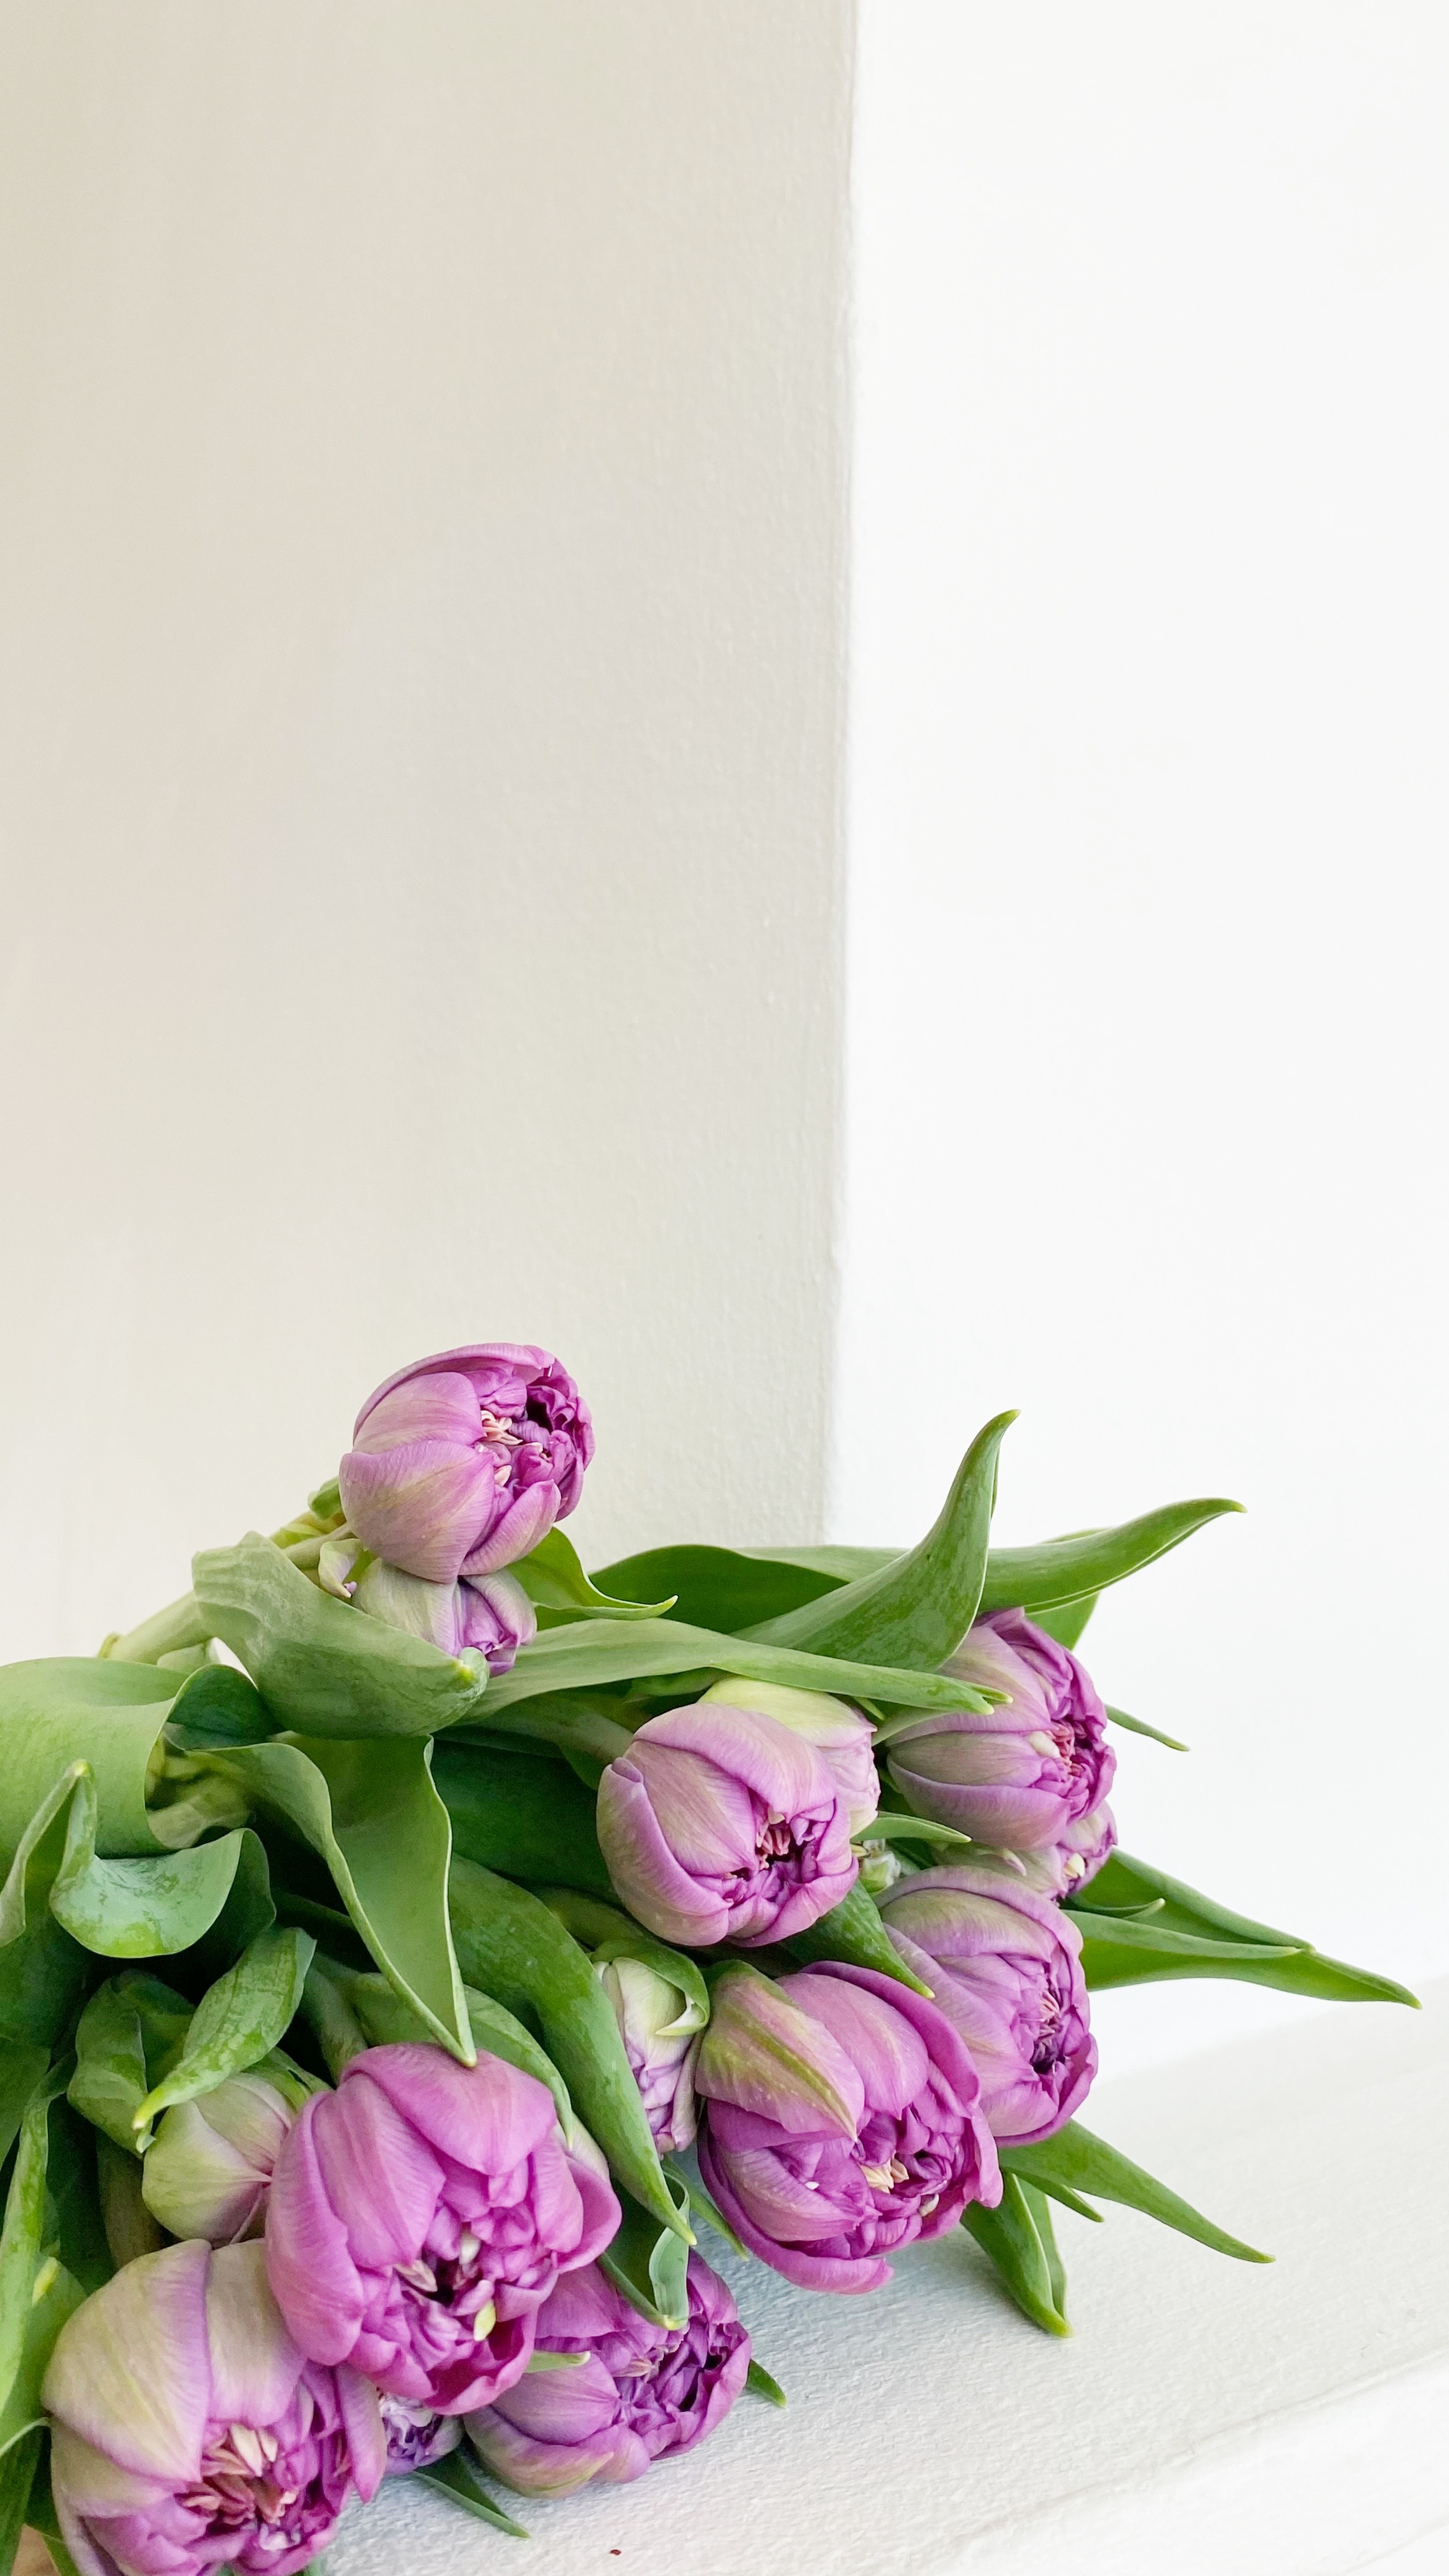 10 curiosidades sobre los tulipanes que os encantará saber